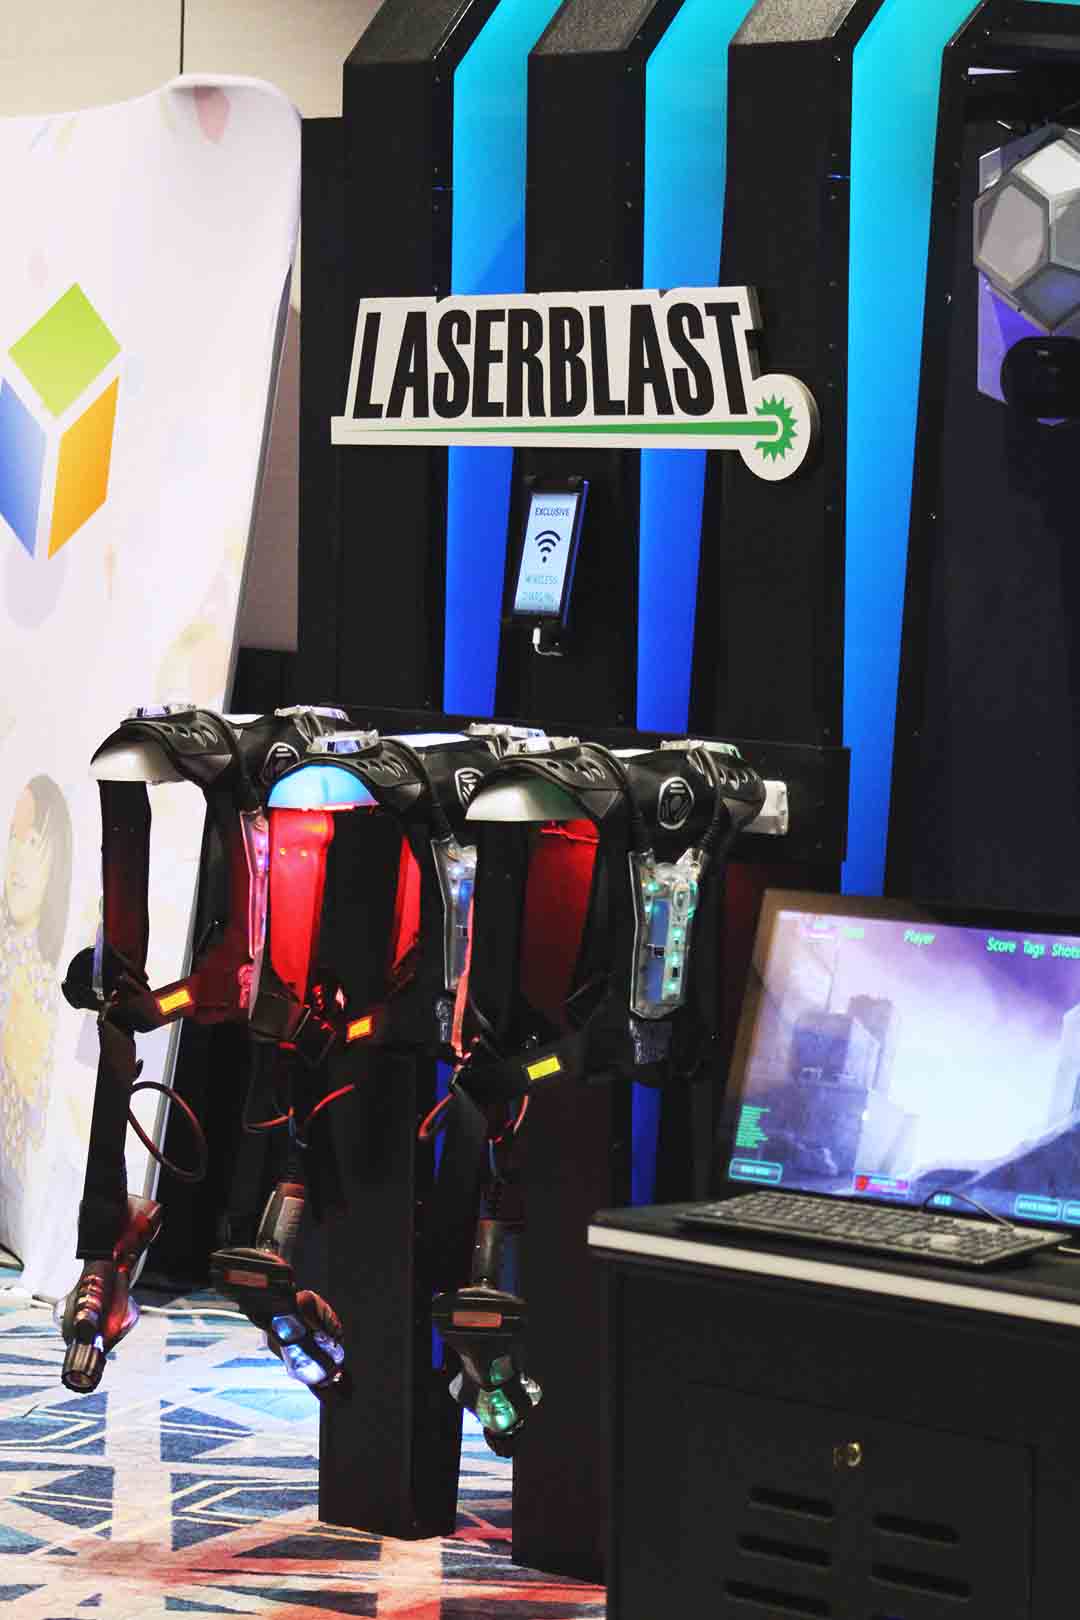 SAC Gamefest features laser tag – WSU News